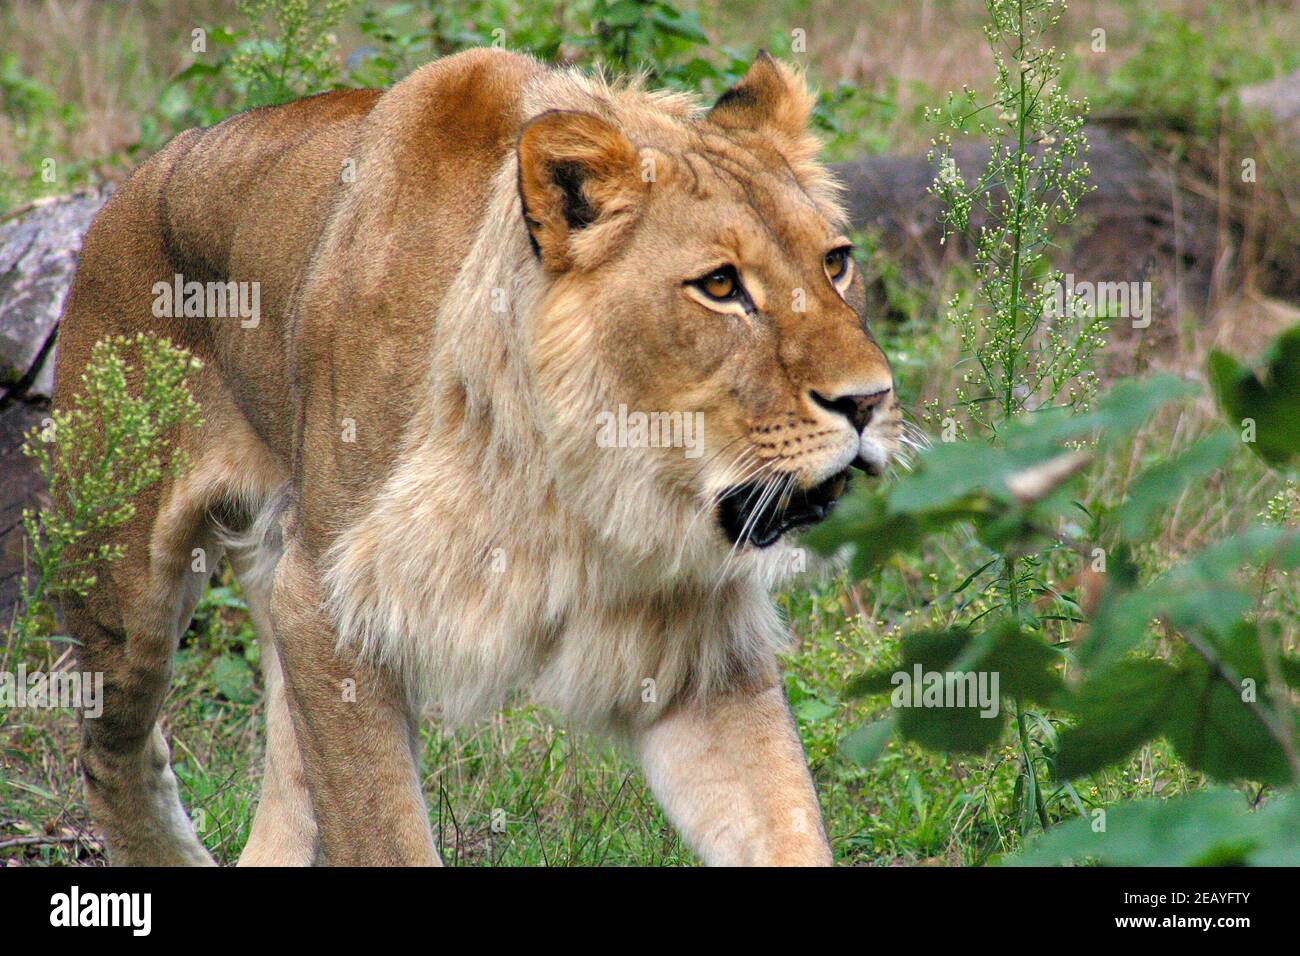 A walking African Lion in a Berlin Zoo, Germany Stock Photo